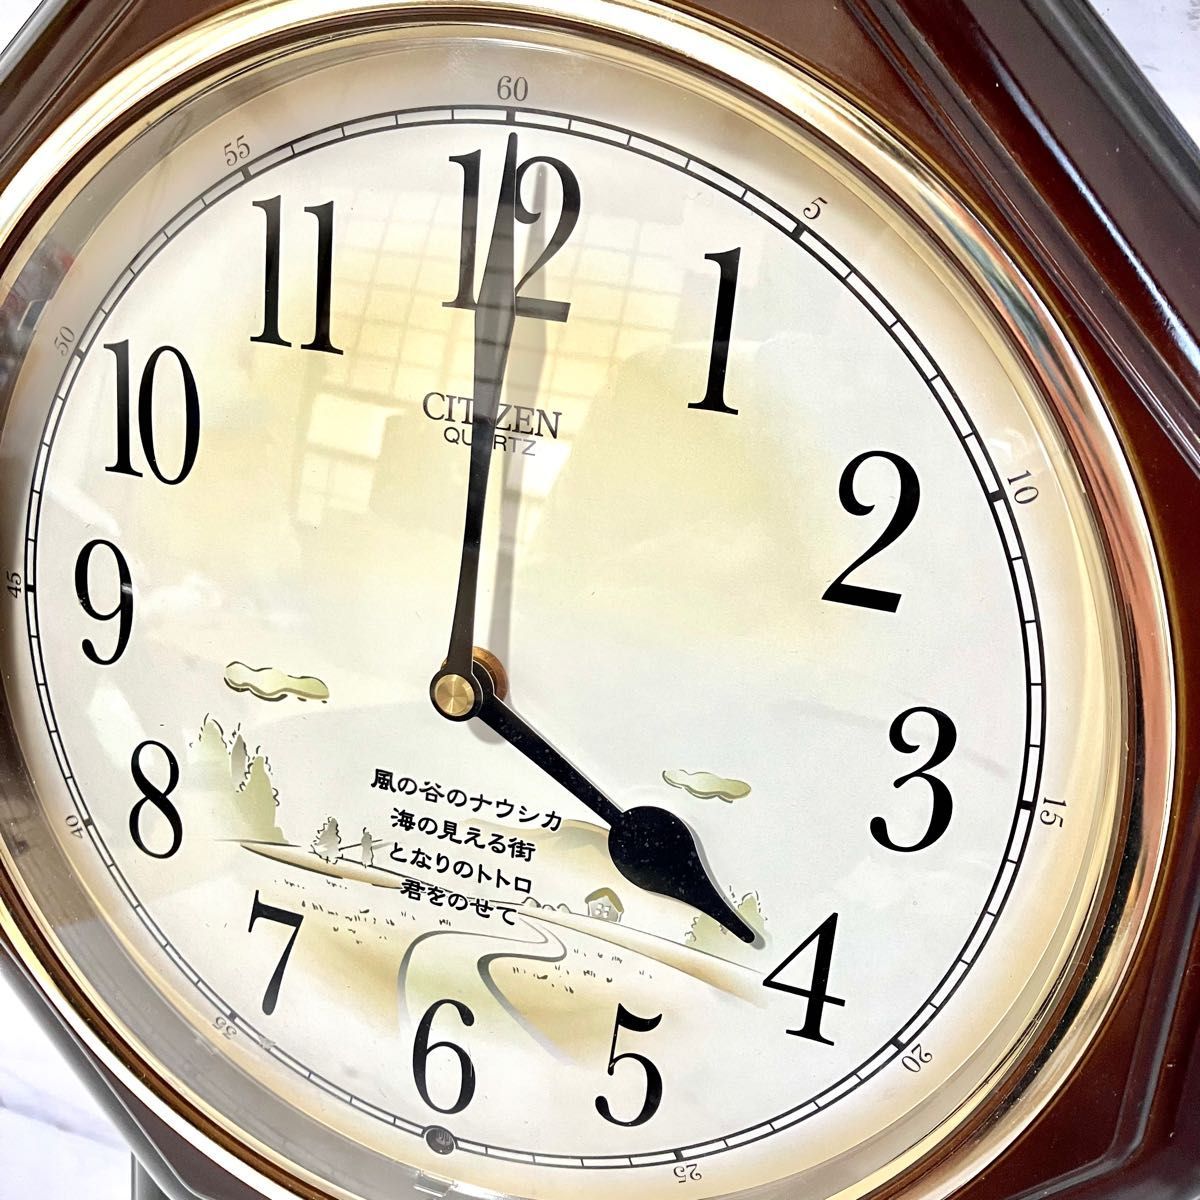 CITIZEN 壁掛時計 柱時計 置き時計 スタジオジブリ 振り子時計-